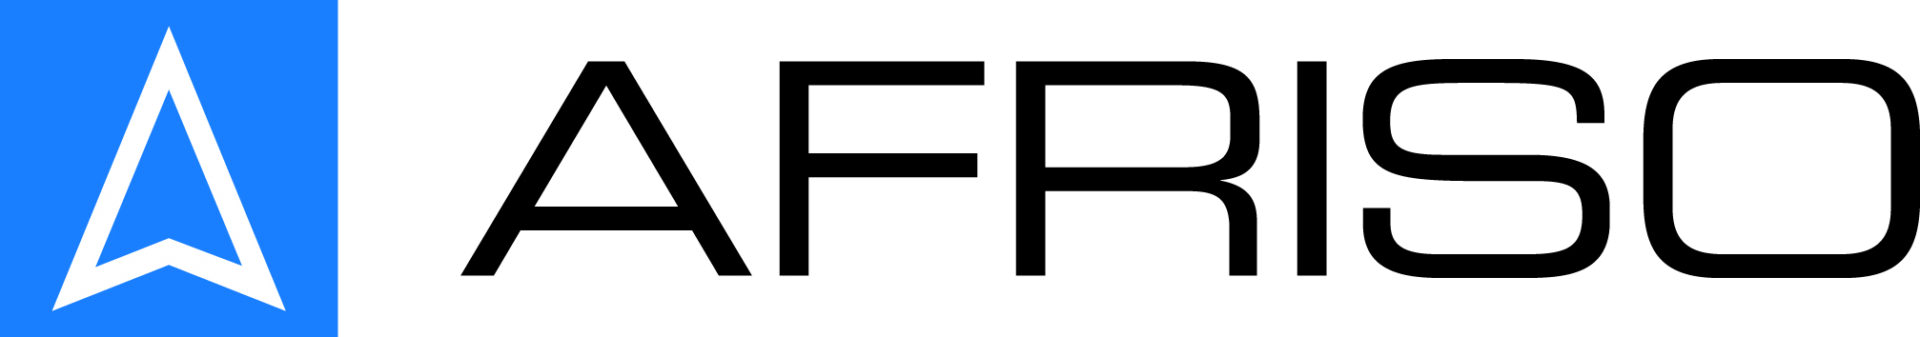 Logo Afriso